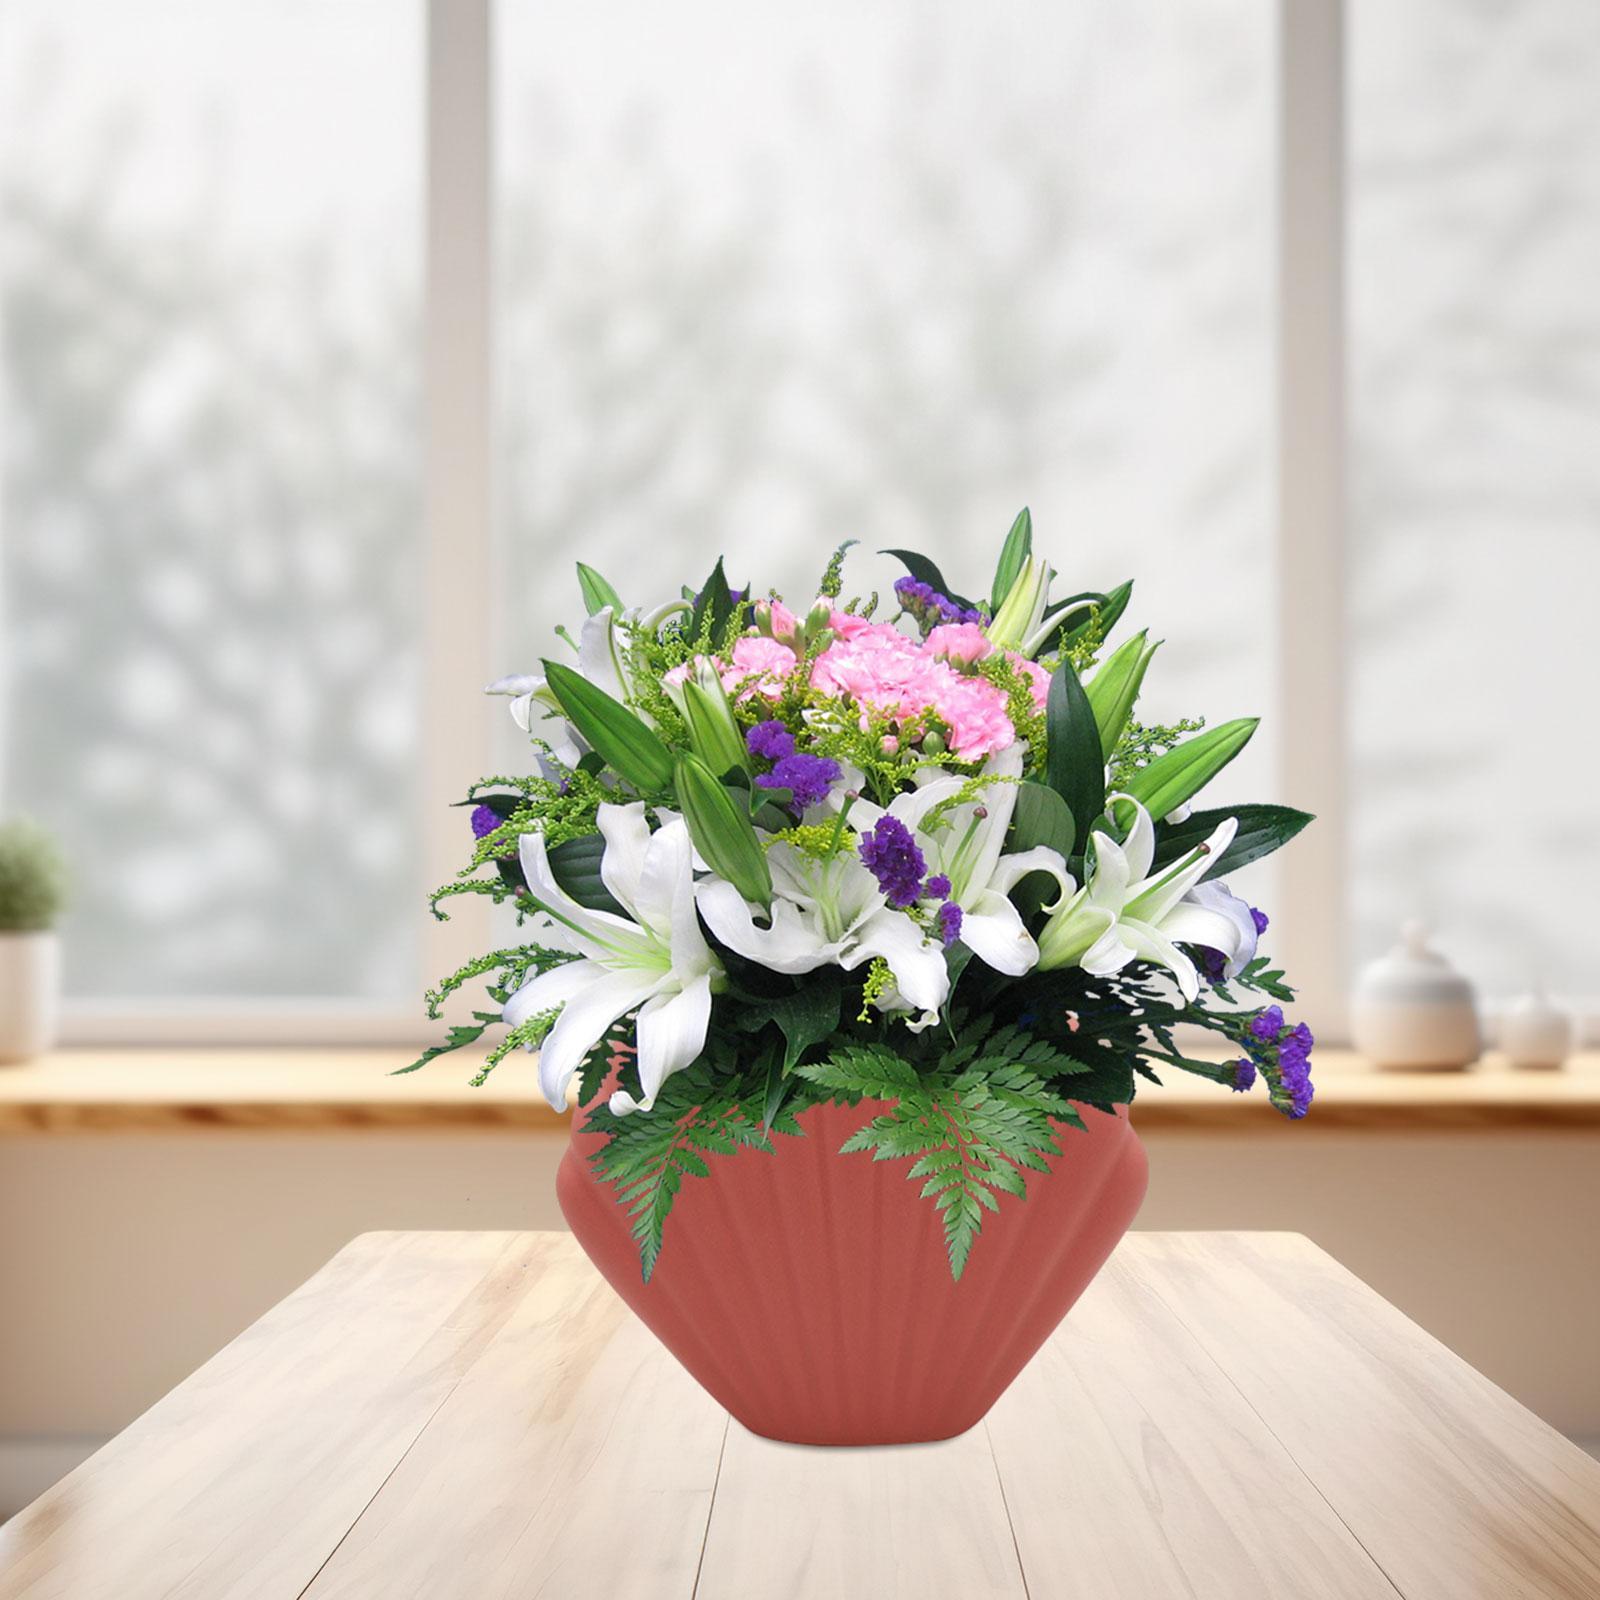 Ceramic Vase Flower Vases Decorative Arrangement Modern Portable Ornaments for Bedroom Office Party Mantel Decoration